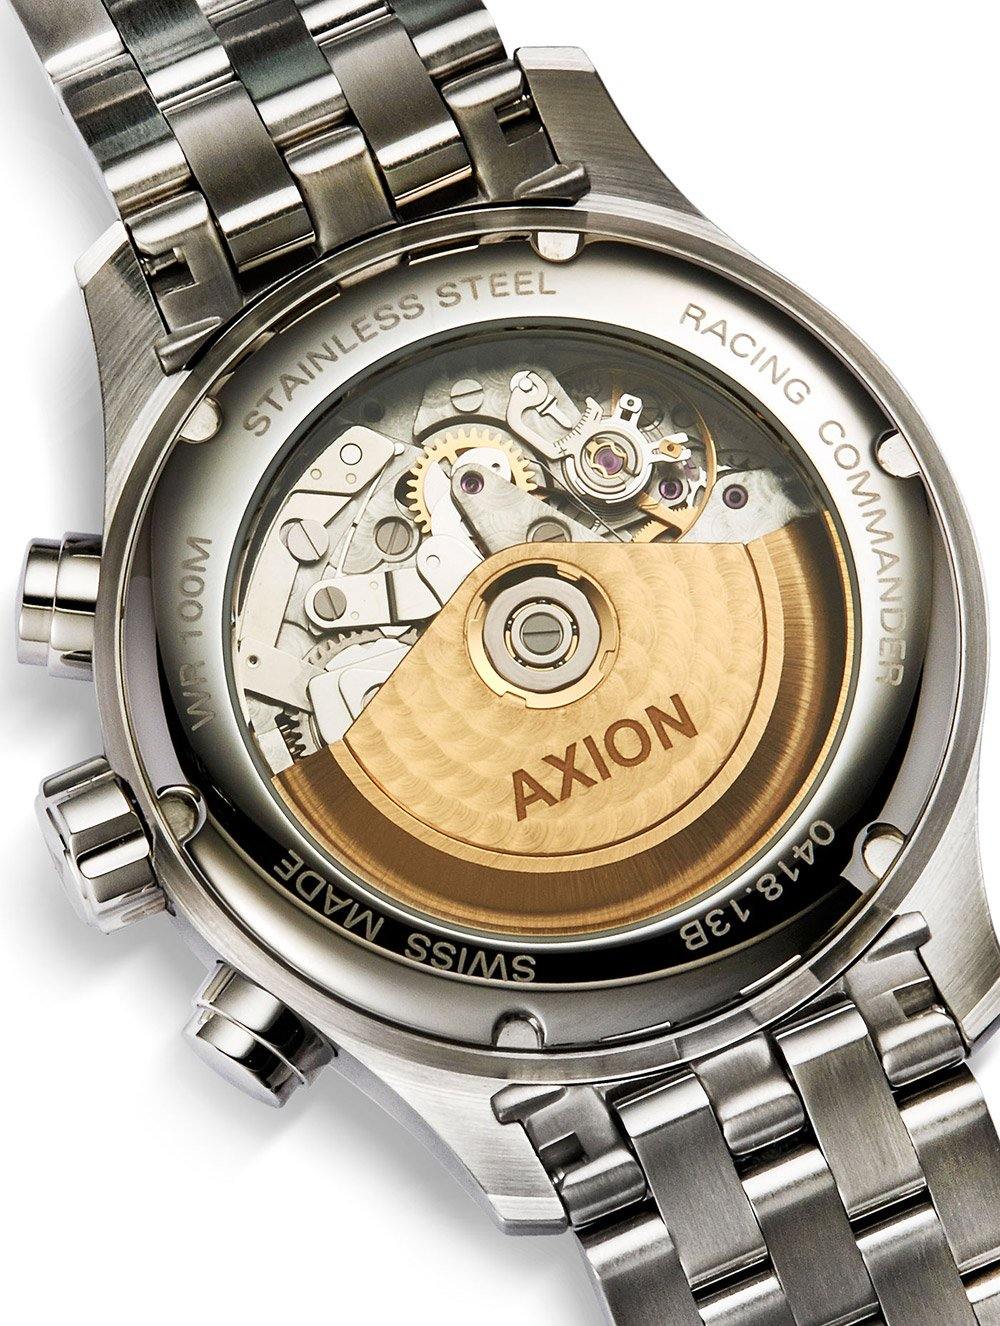 AXION RACING COMMANDER CHRONOGRAPH - Axion Watch